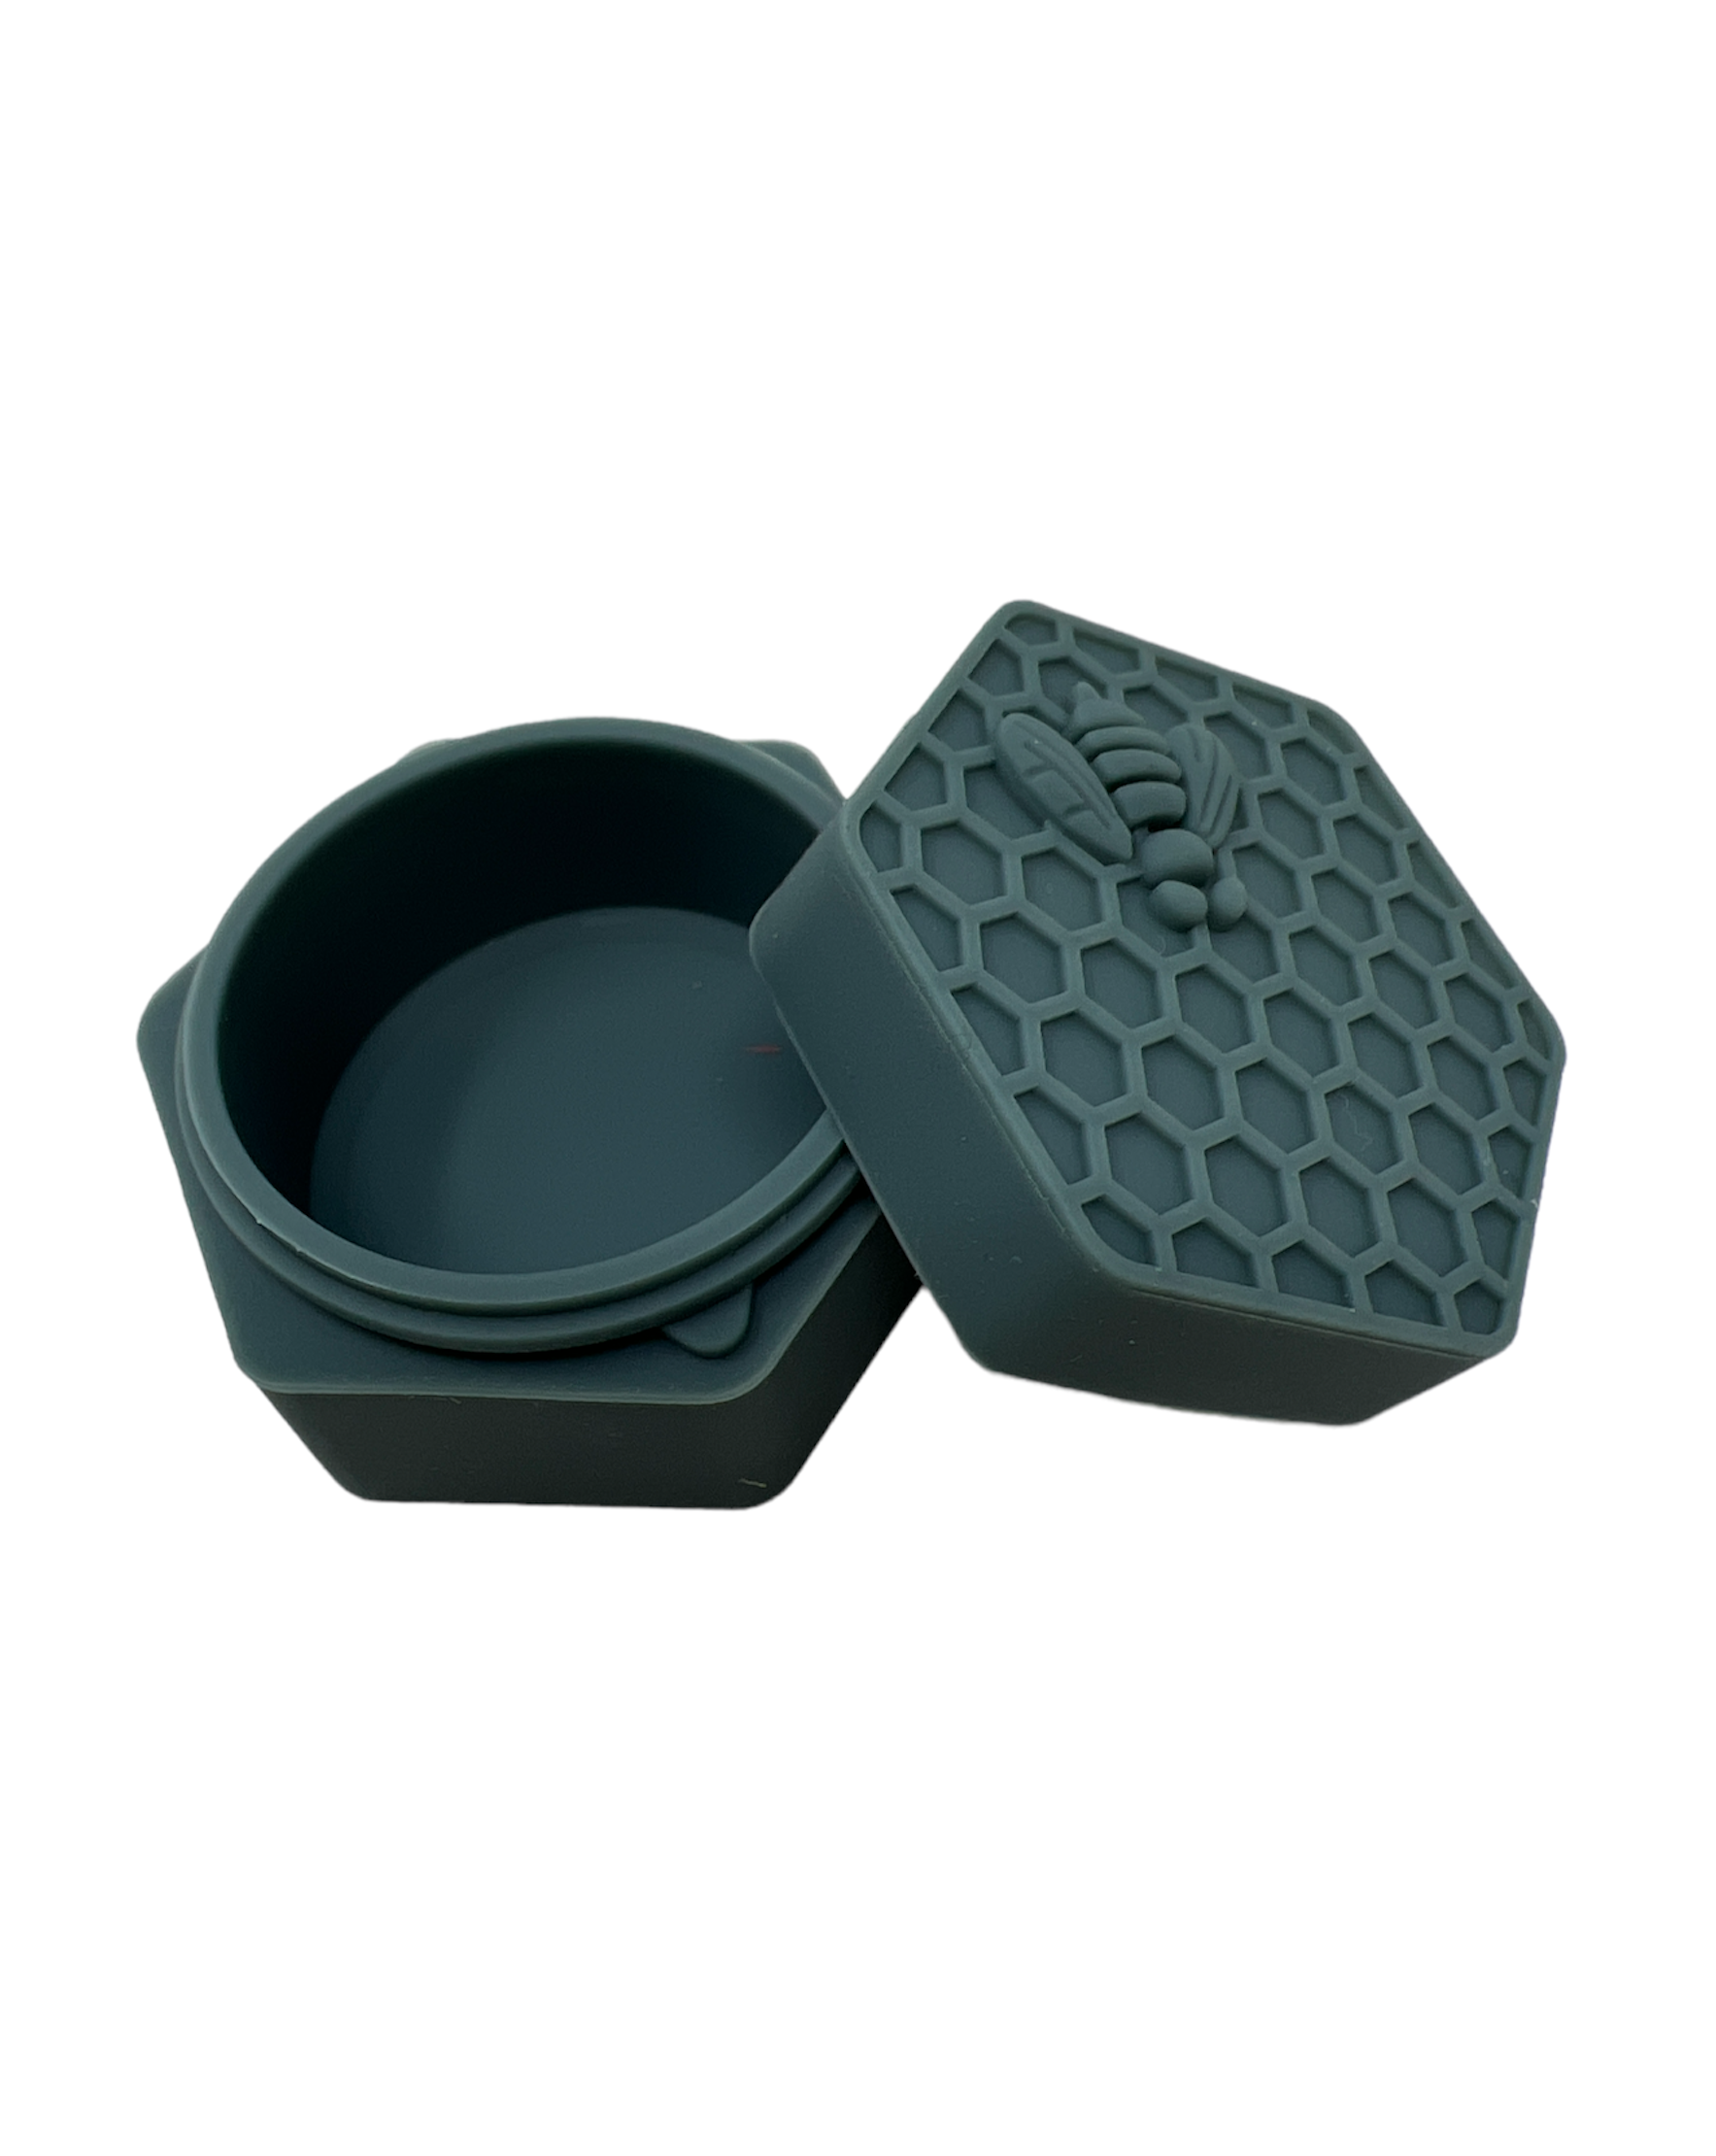 Hexagon Silicone Wax Container